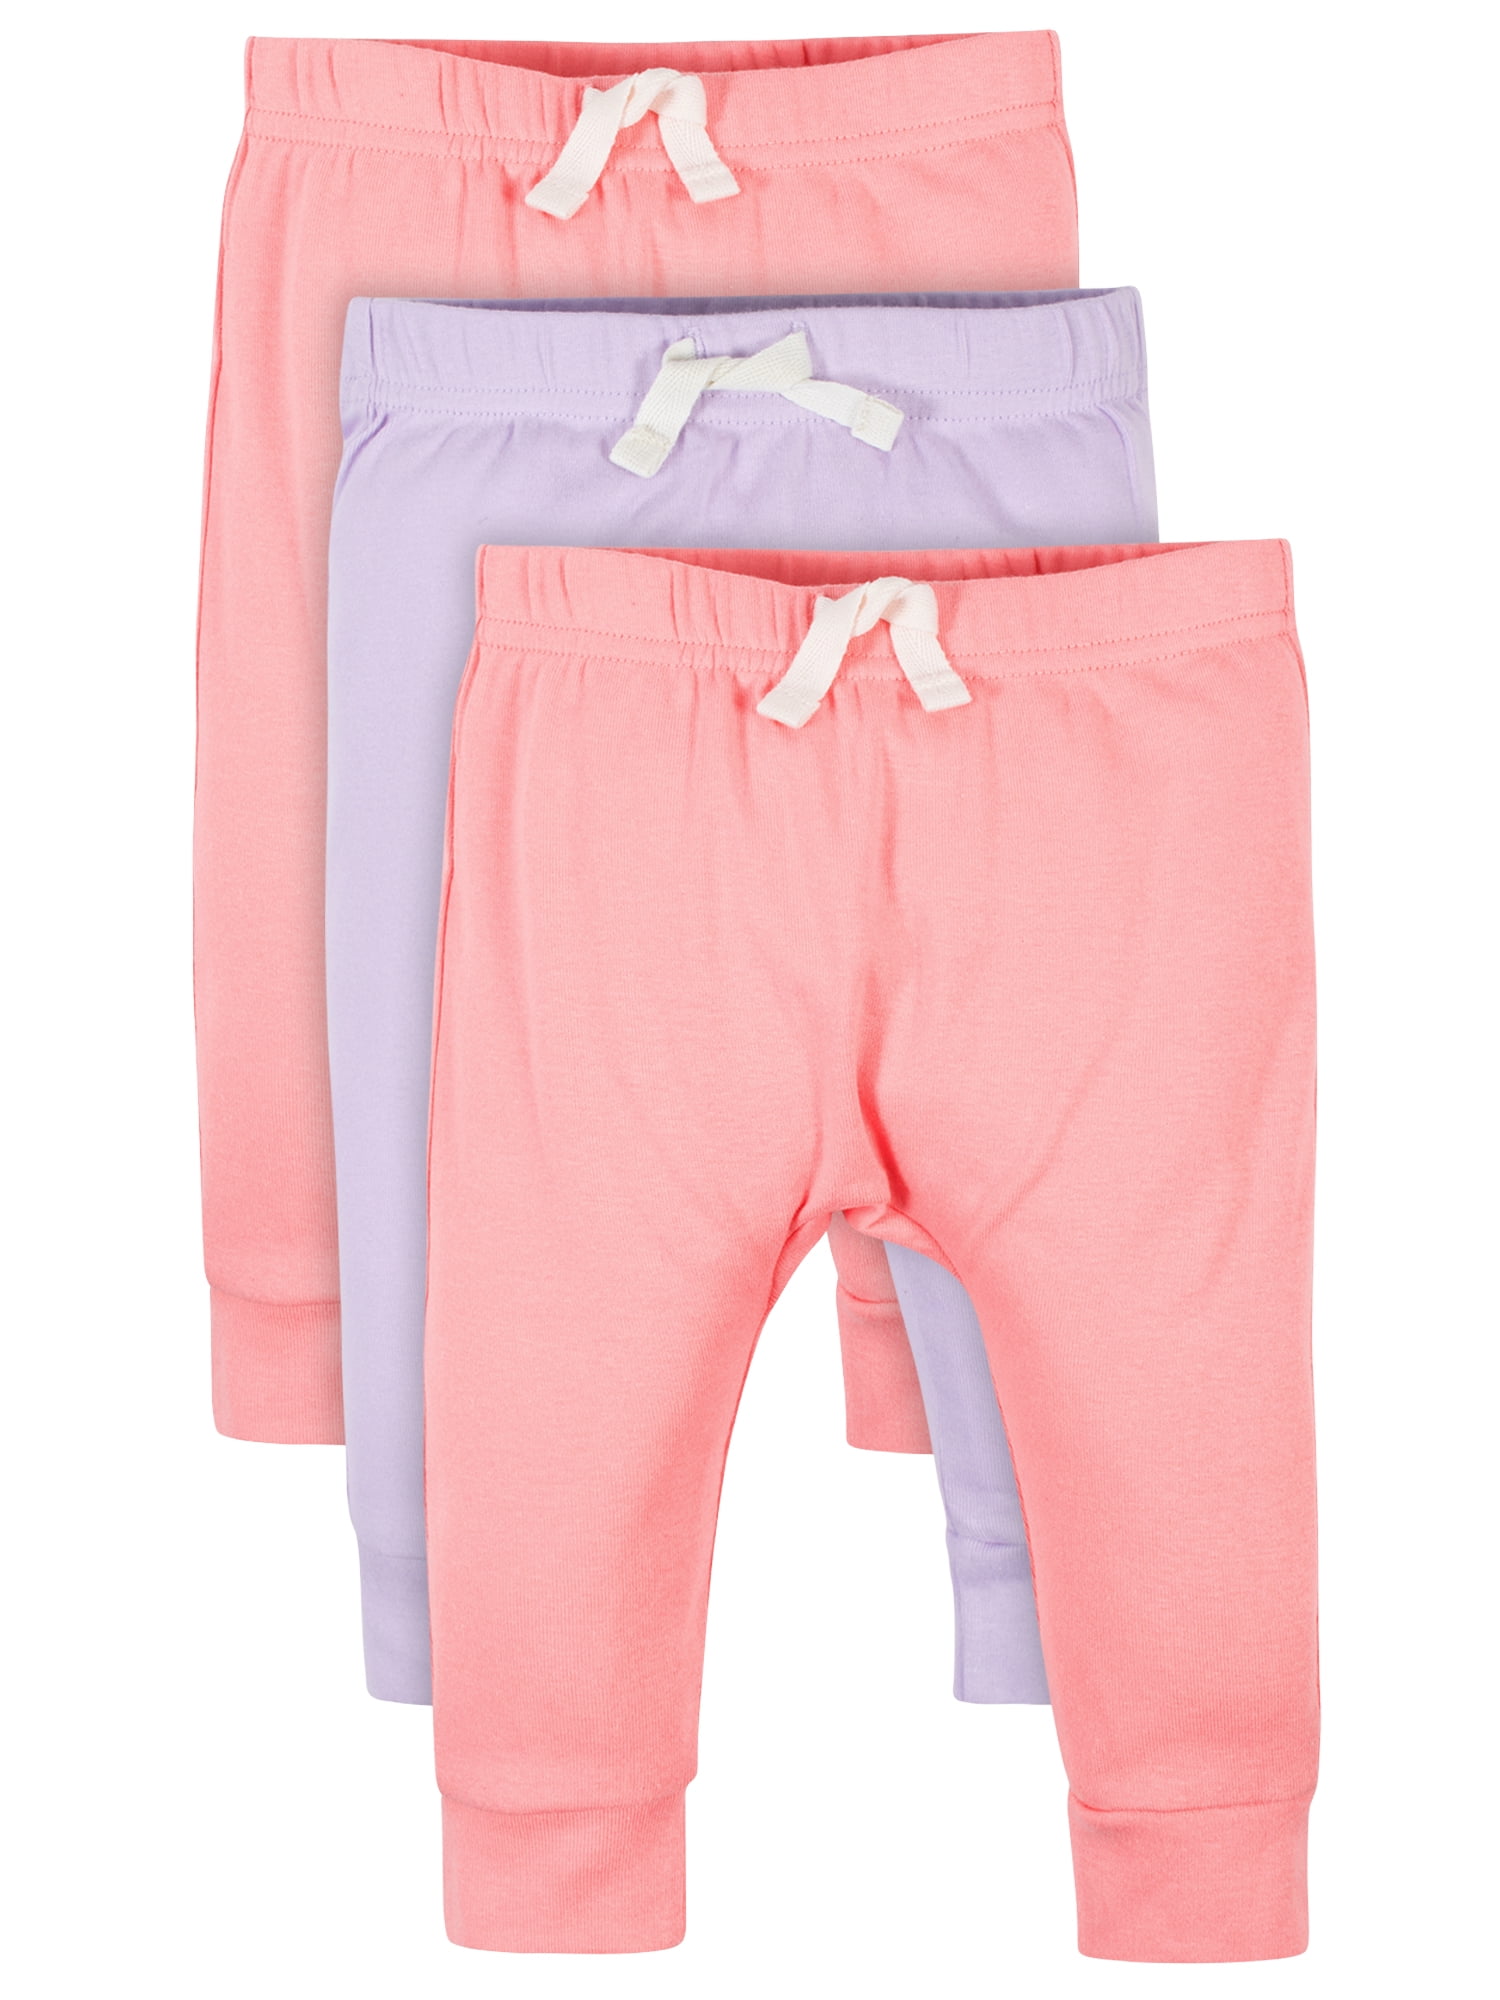 Tiny Baby Premature Summer Dress Pants Set Pink Princess Knickers 3 5 8 lbs 51 